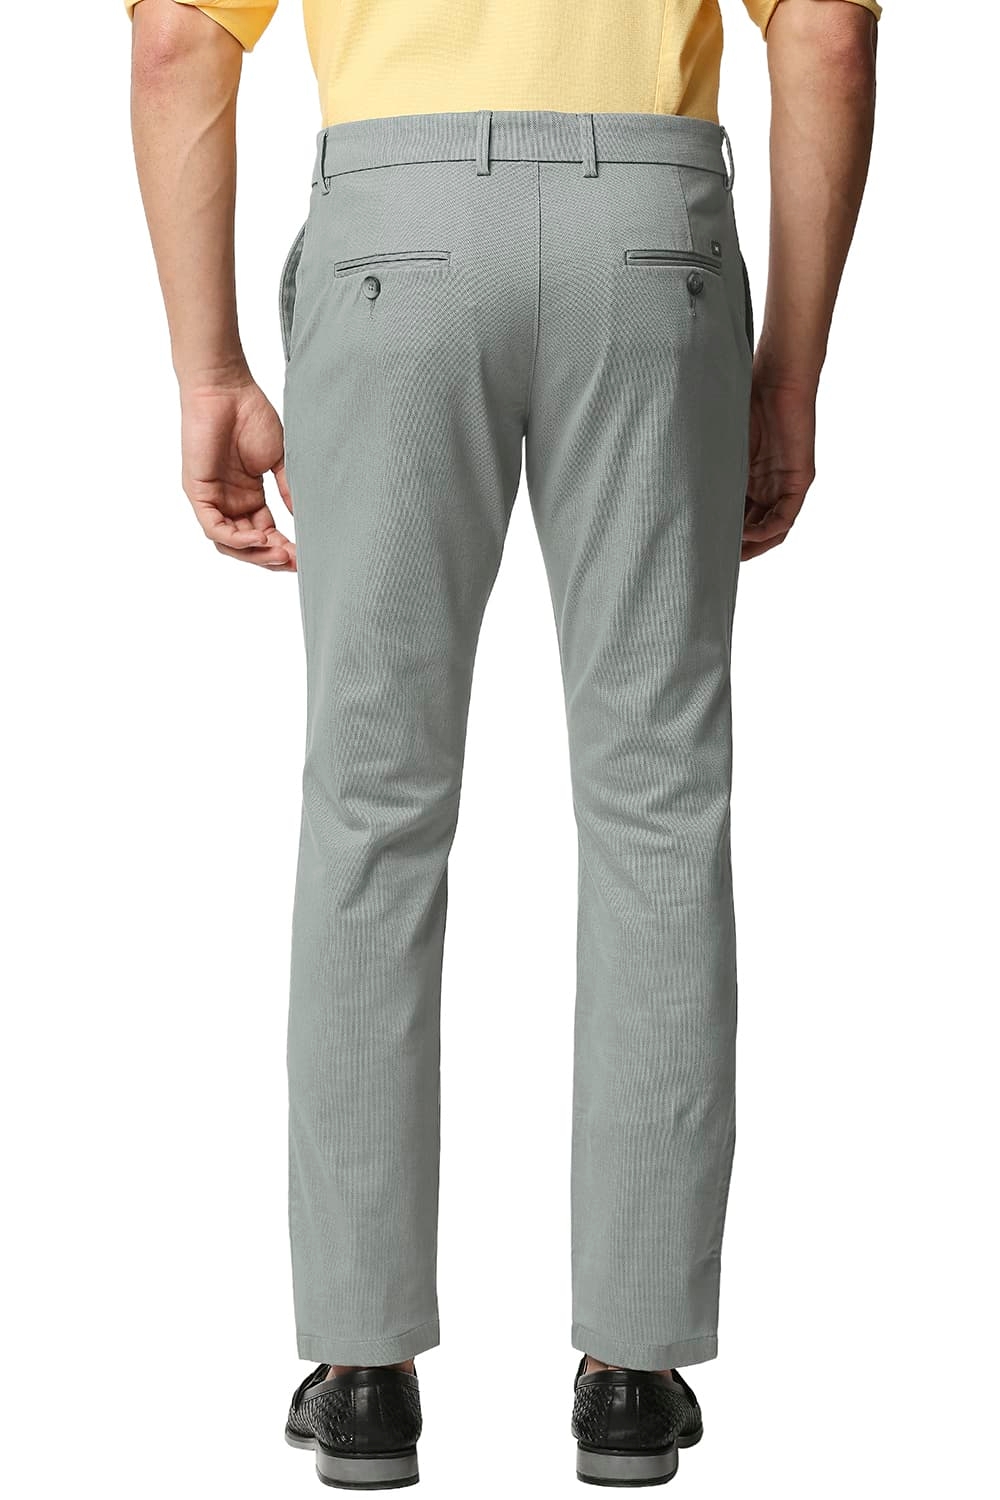 Basics | Men's Mid Grey Cotton Blend Printed Trouser 1